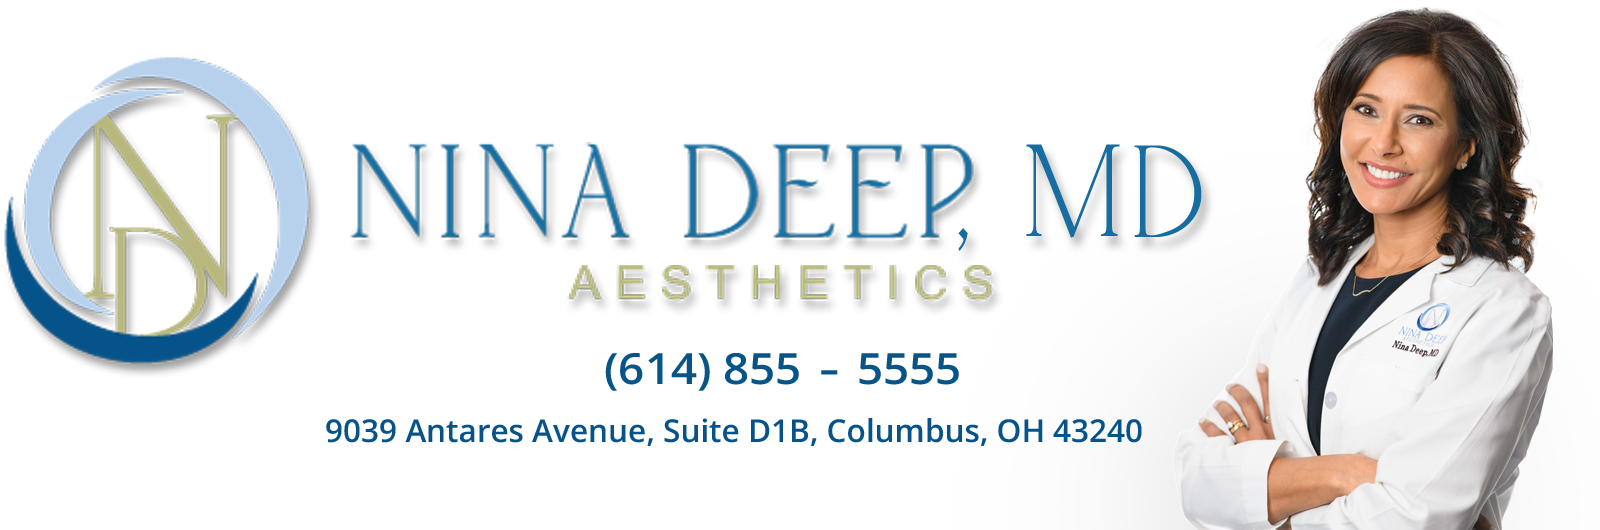 Dr. Nina Deep, MD - Nina Deep, MD Aesthetics, a Medical Spa in Columbus, Ohio